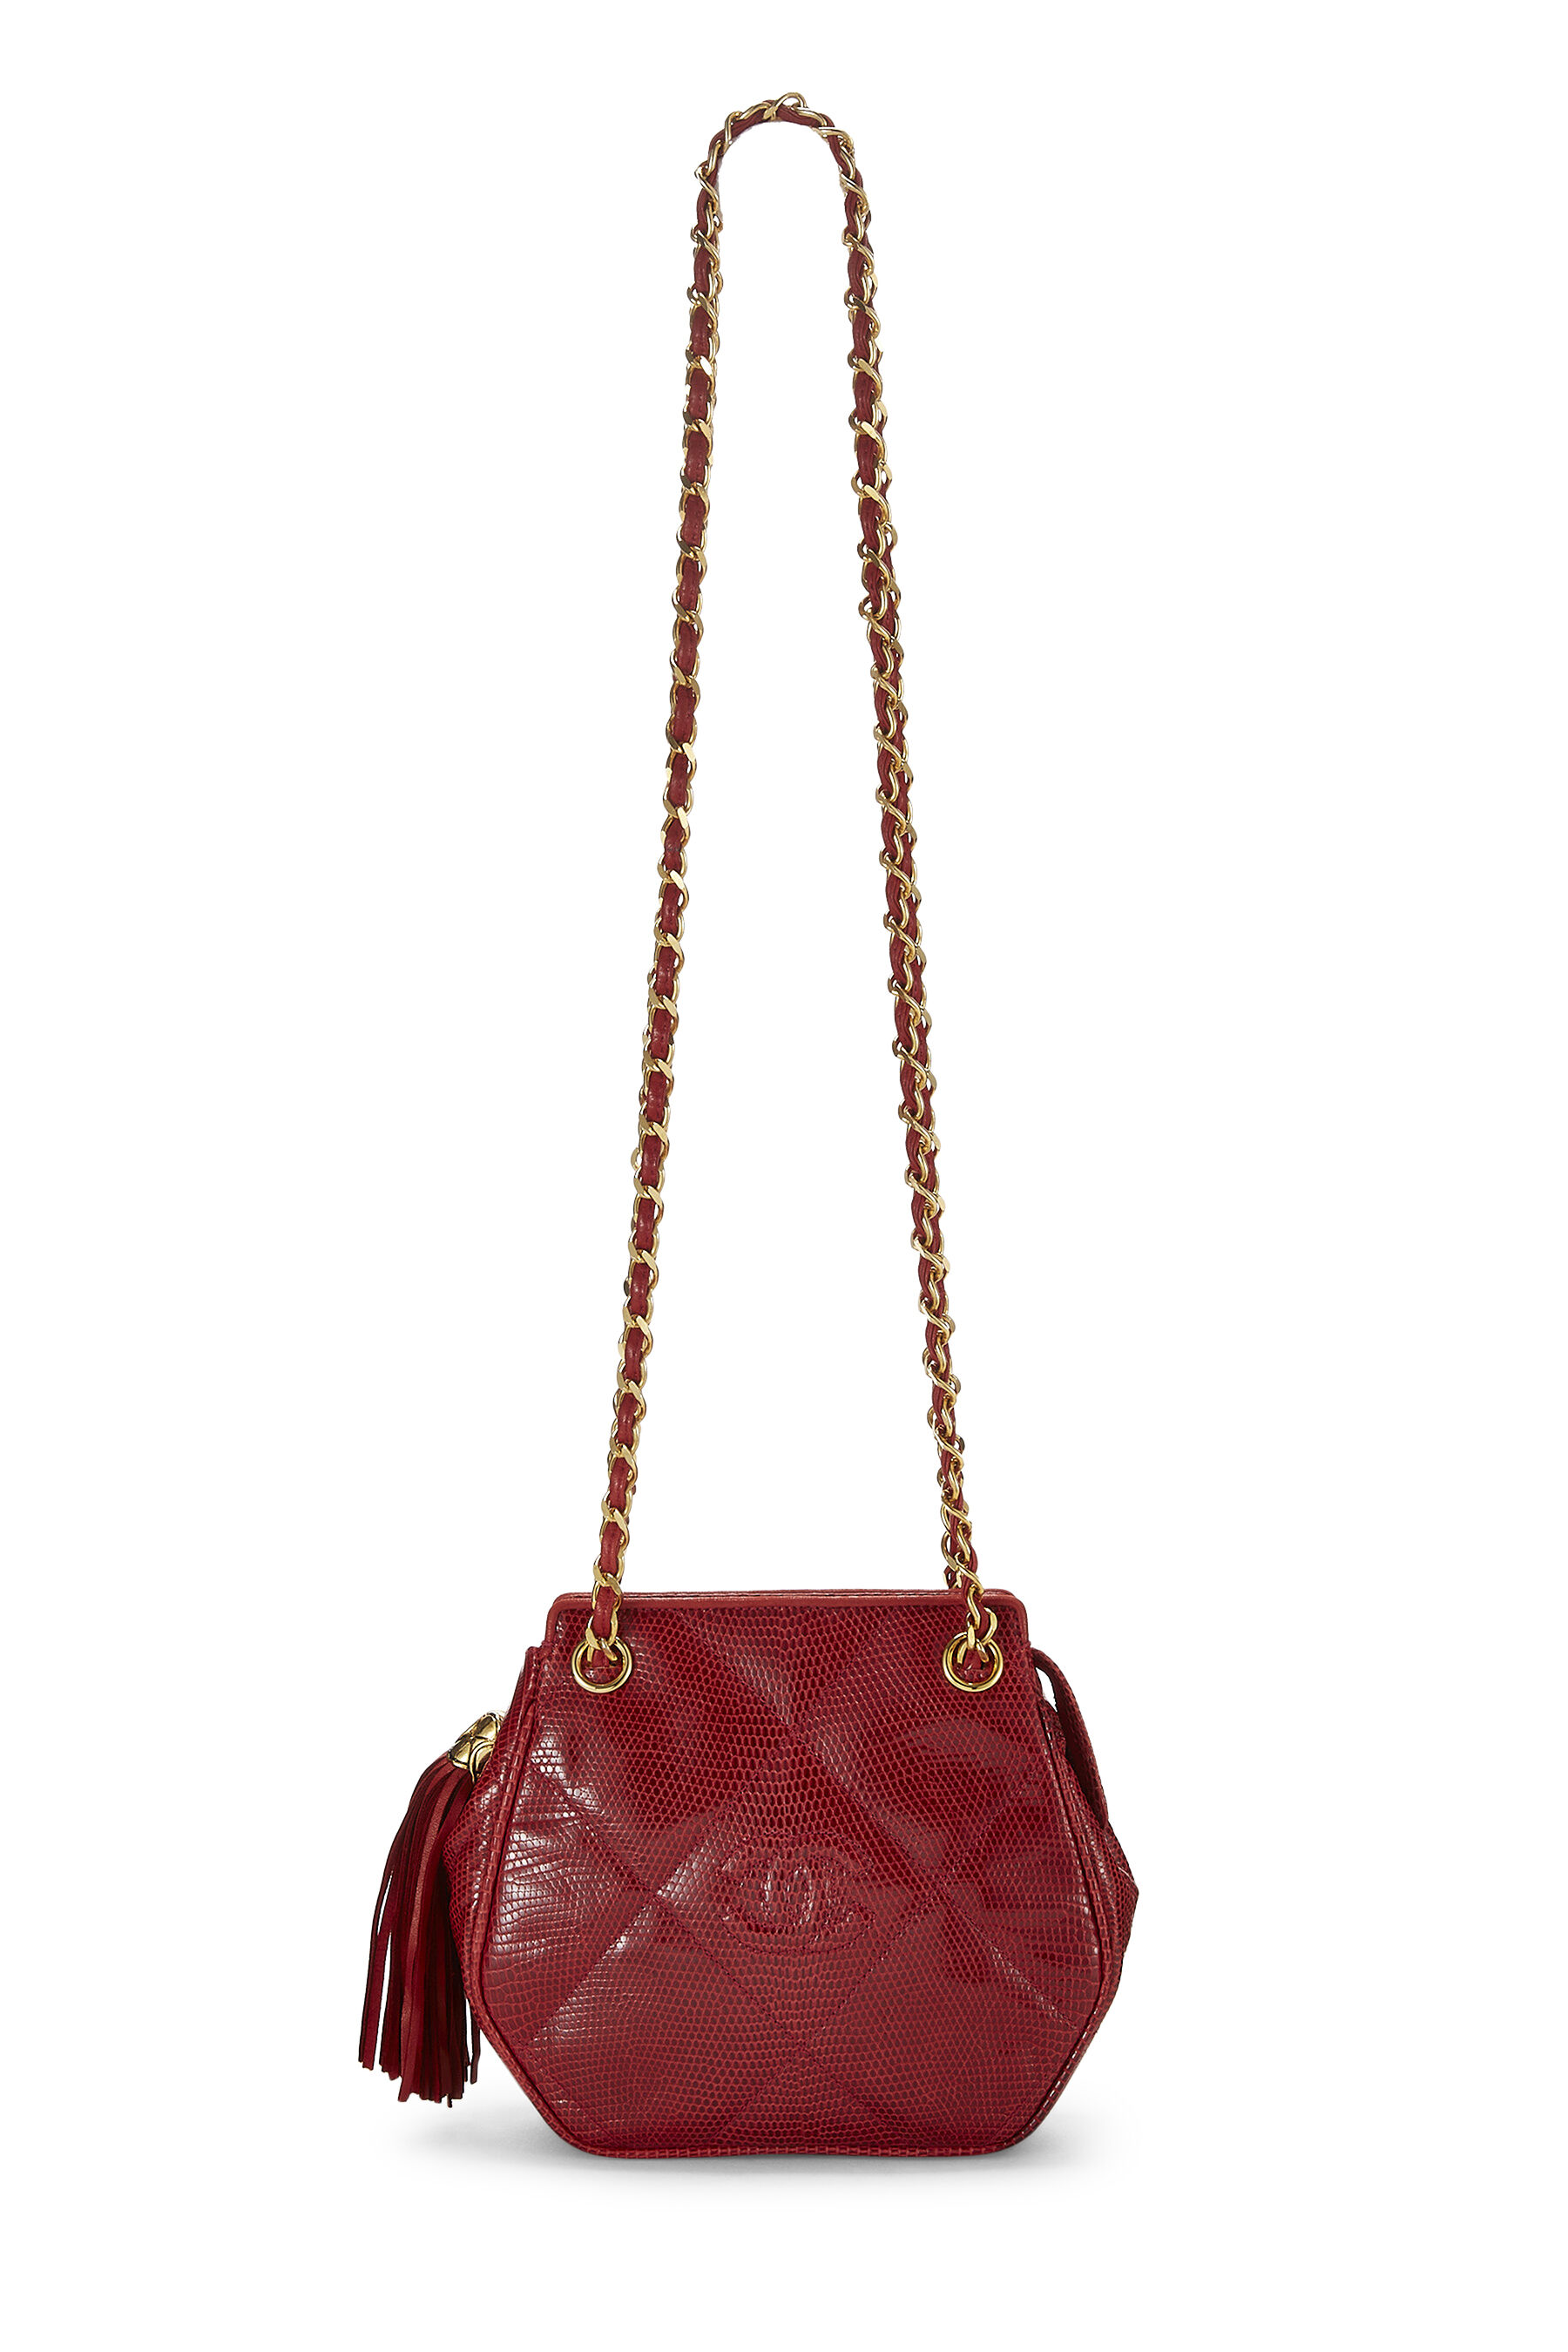 Chanel - Red Lizard Diamond 'CC' Shoulder Bag